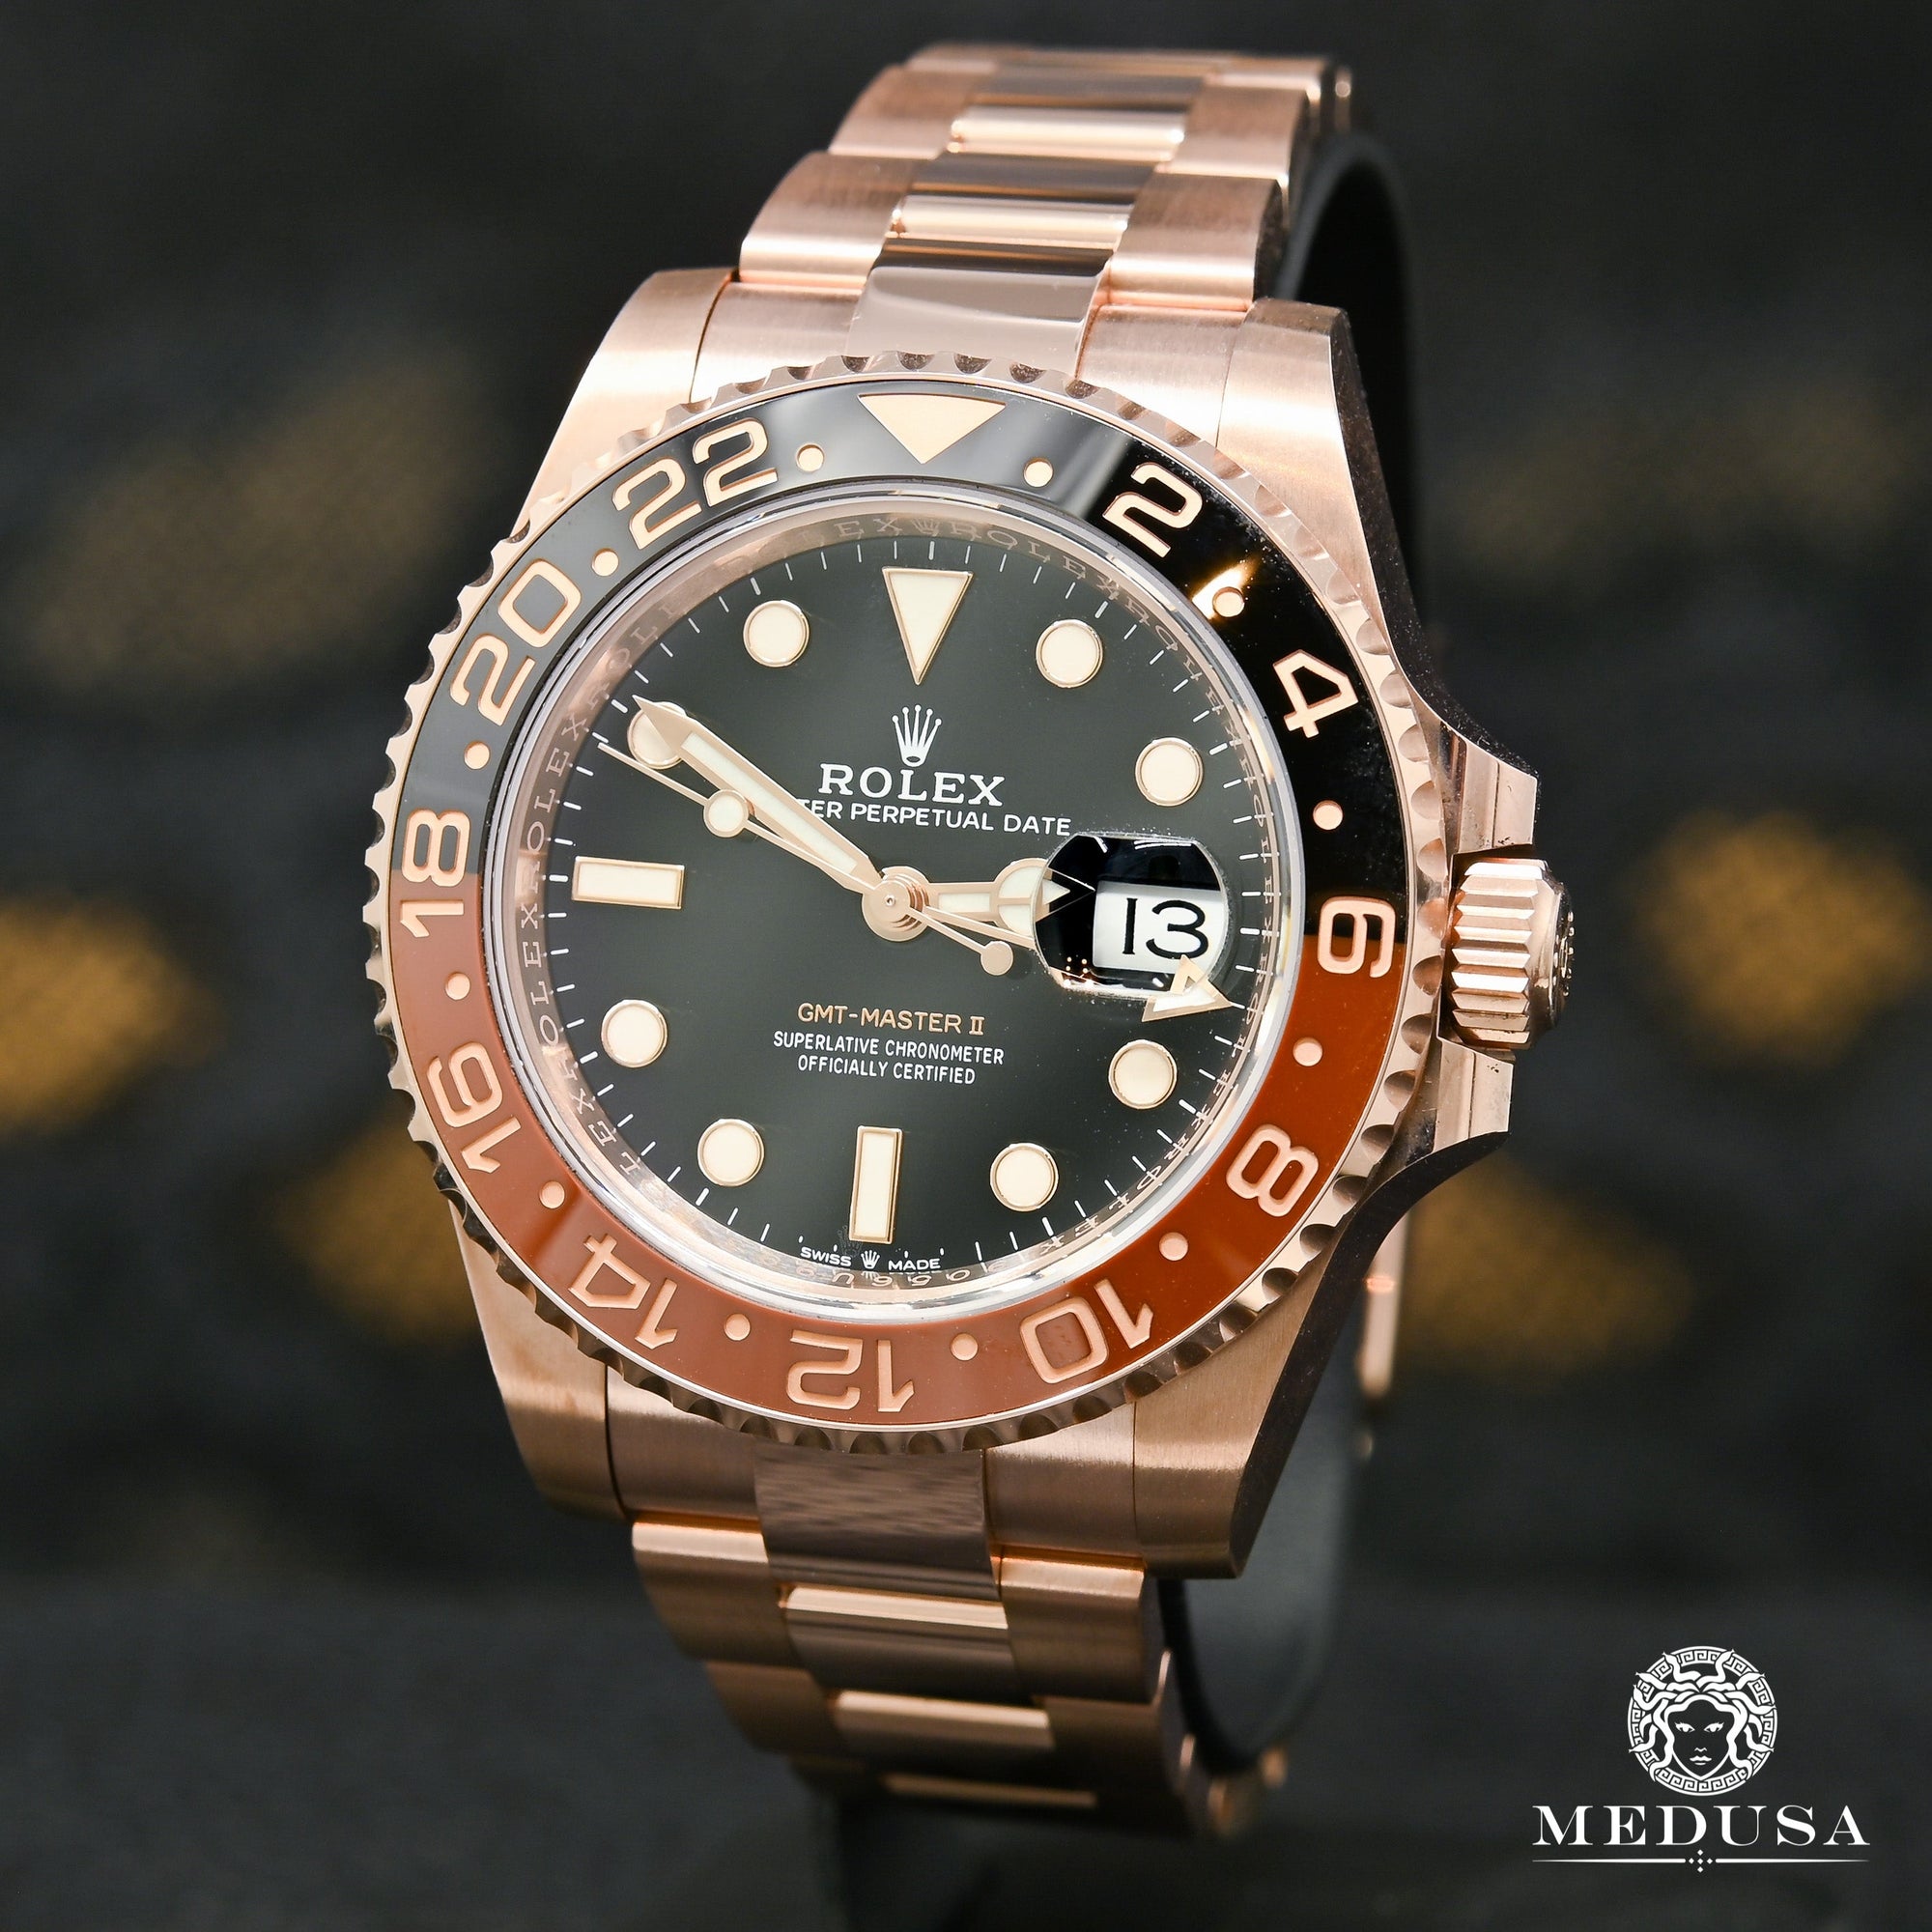 Rolex watch | Rolex GMT-Master II Men's Watch 40mm - Everose Rootbeer Rose Gold